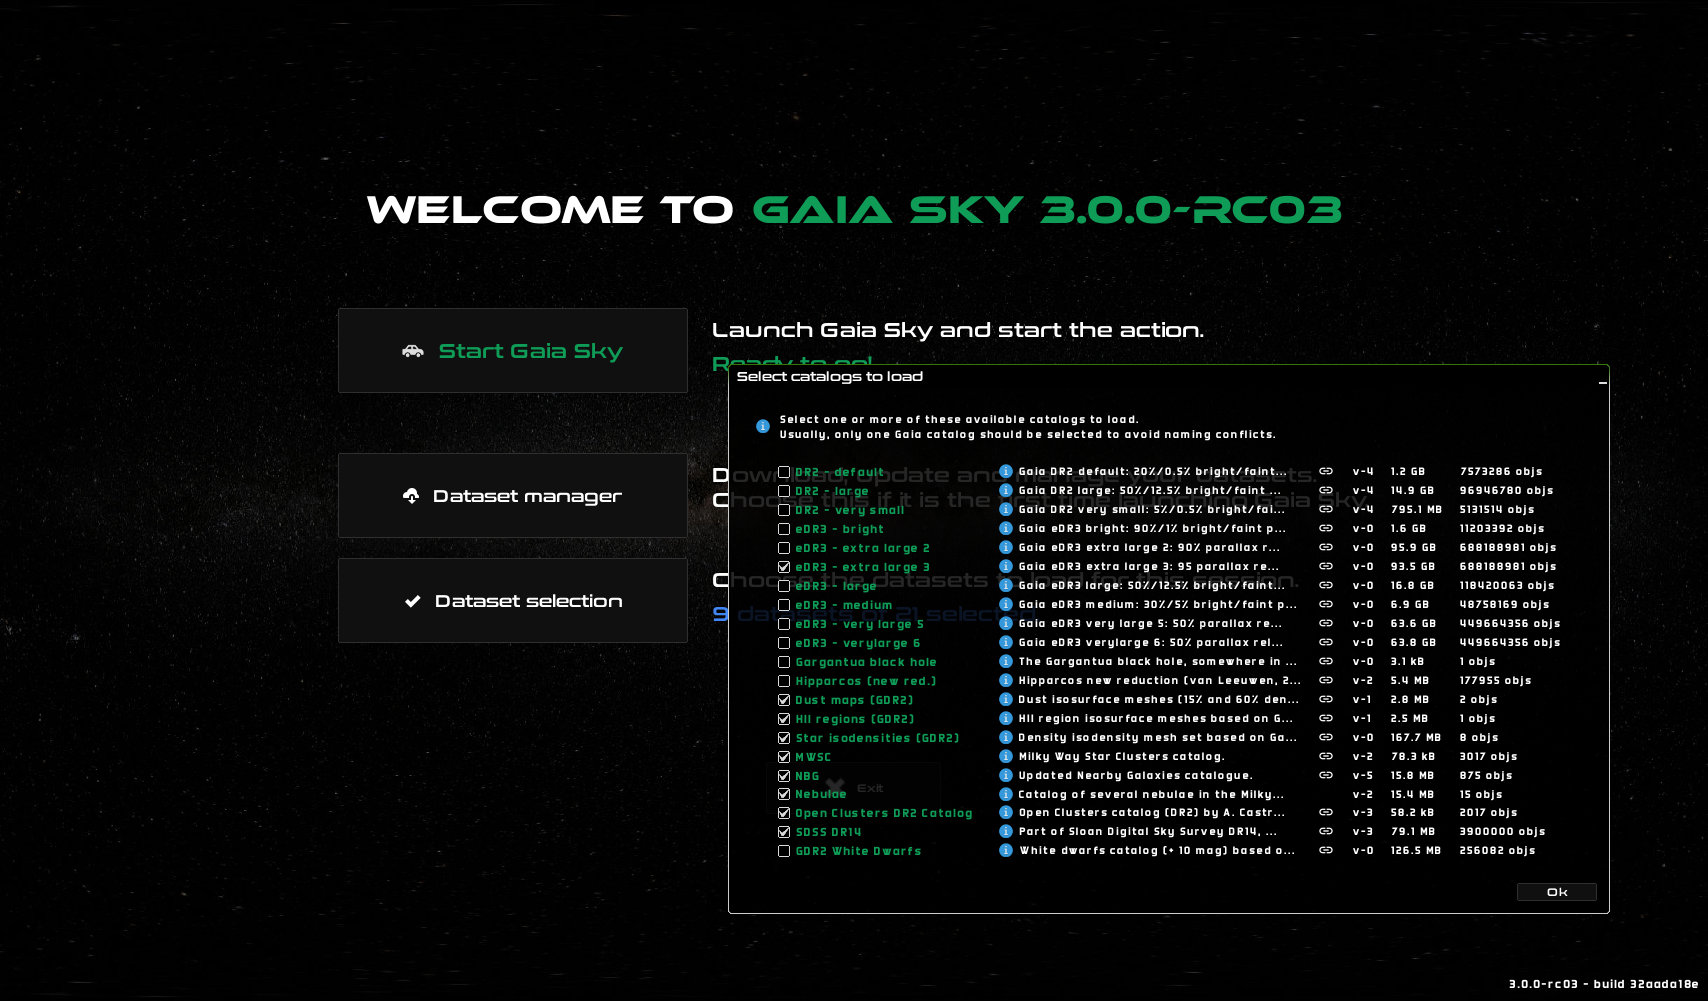 The dataset selection window of Gaia Sky